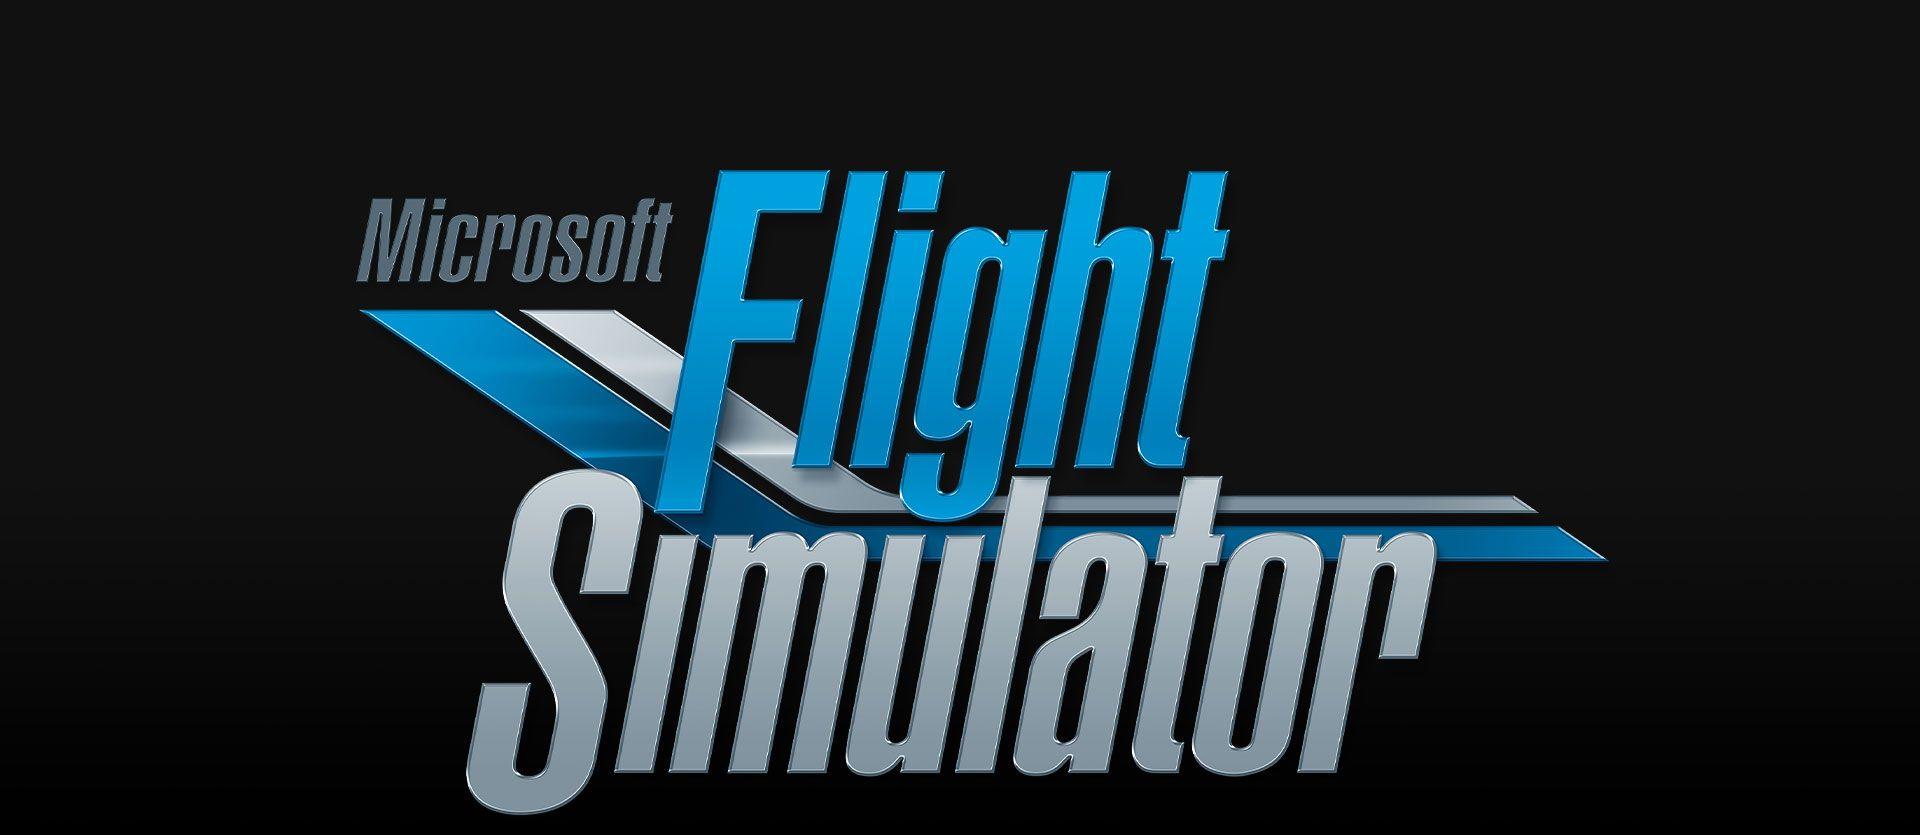 Simulator Logo - Microsoft Flight Simulator for Xbox One & Windows 10 | Xbox